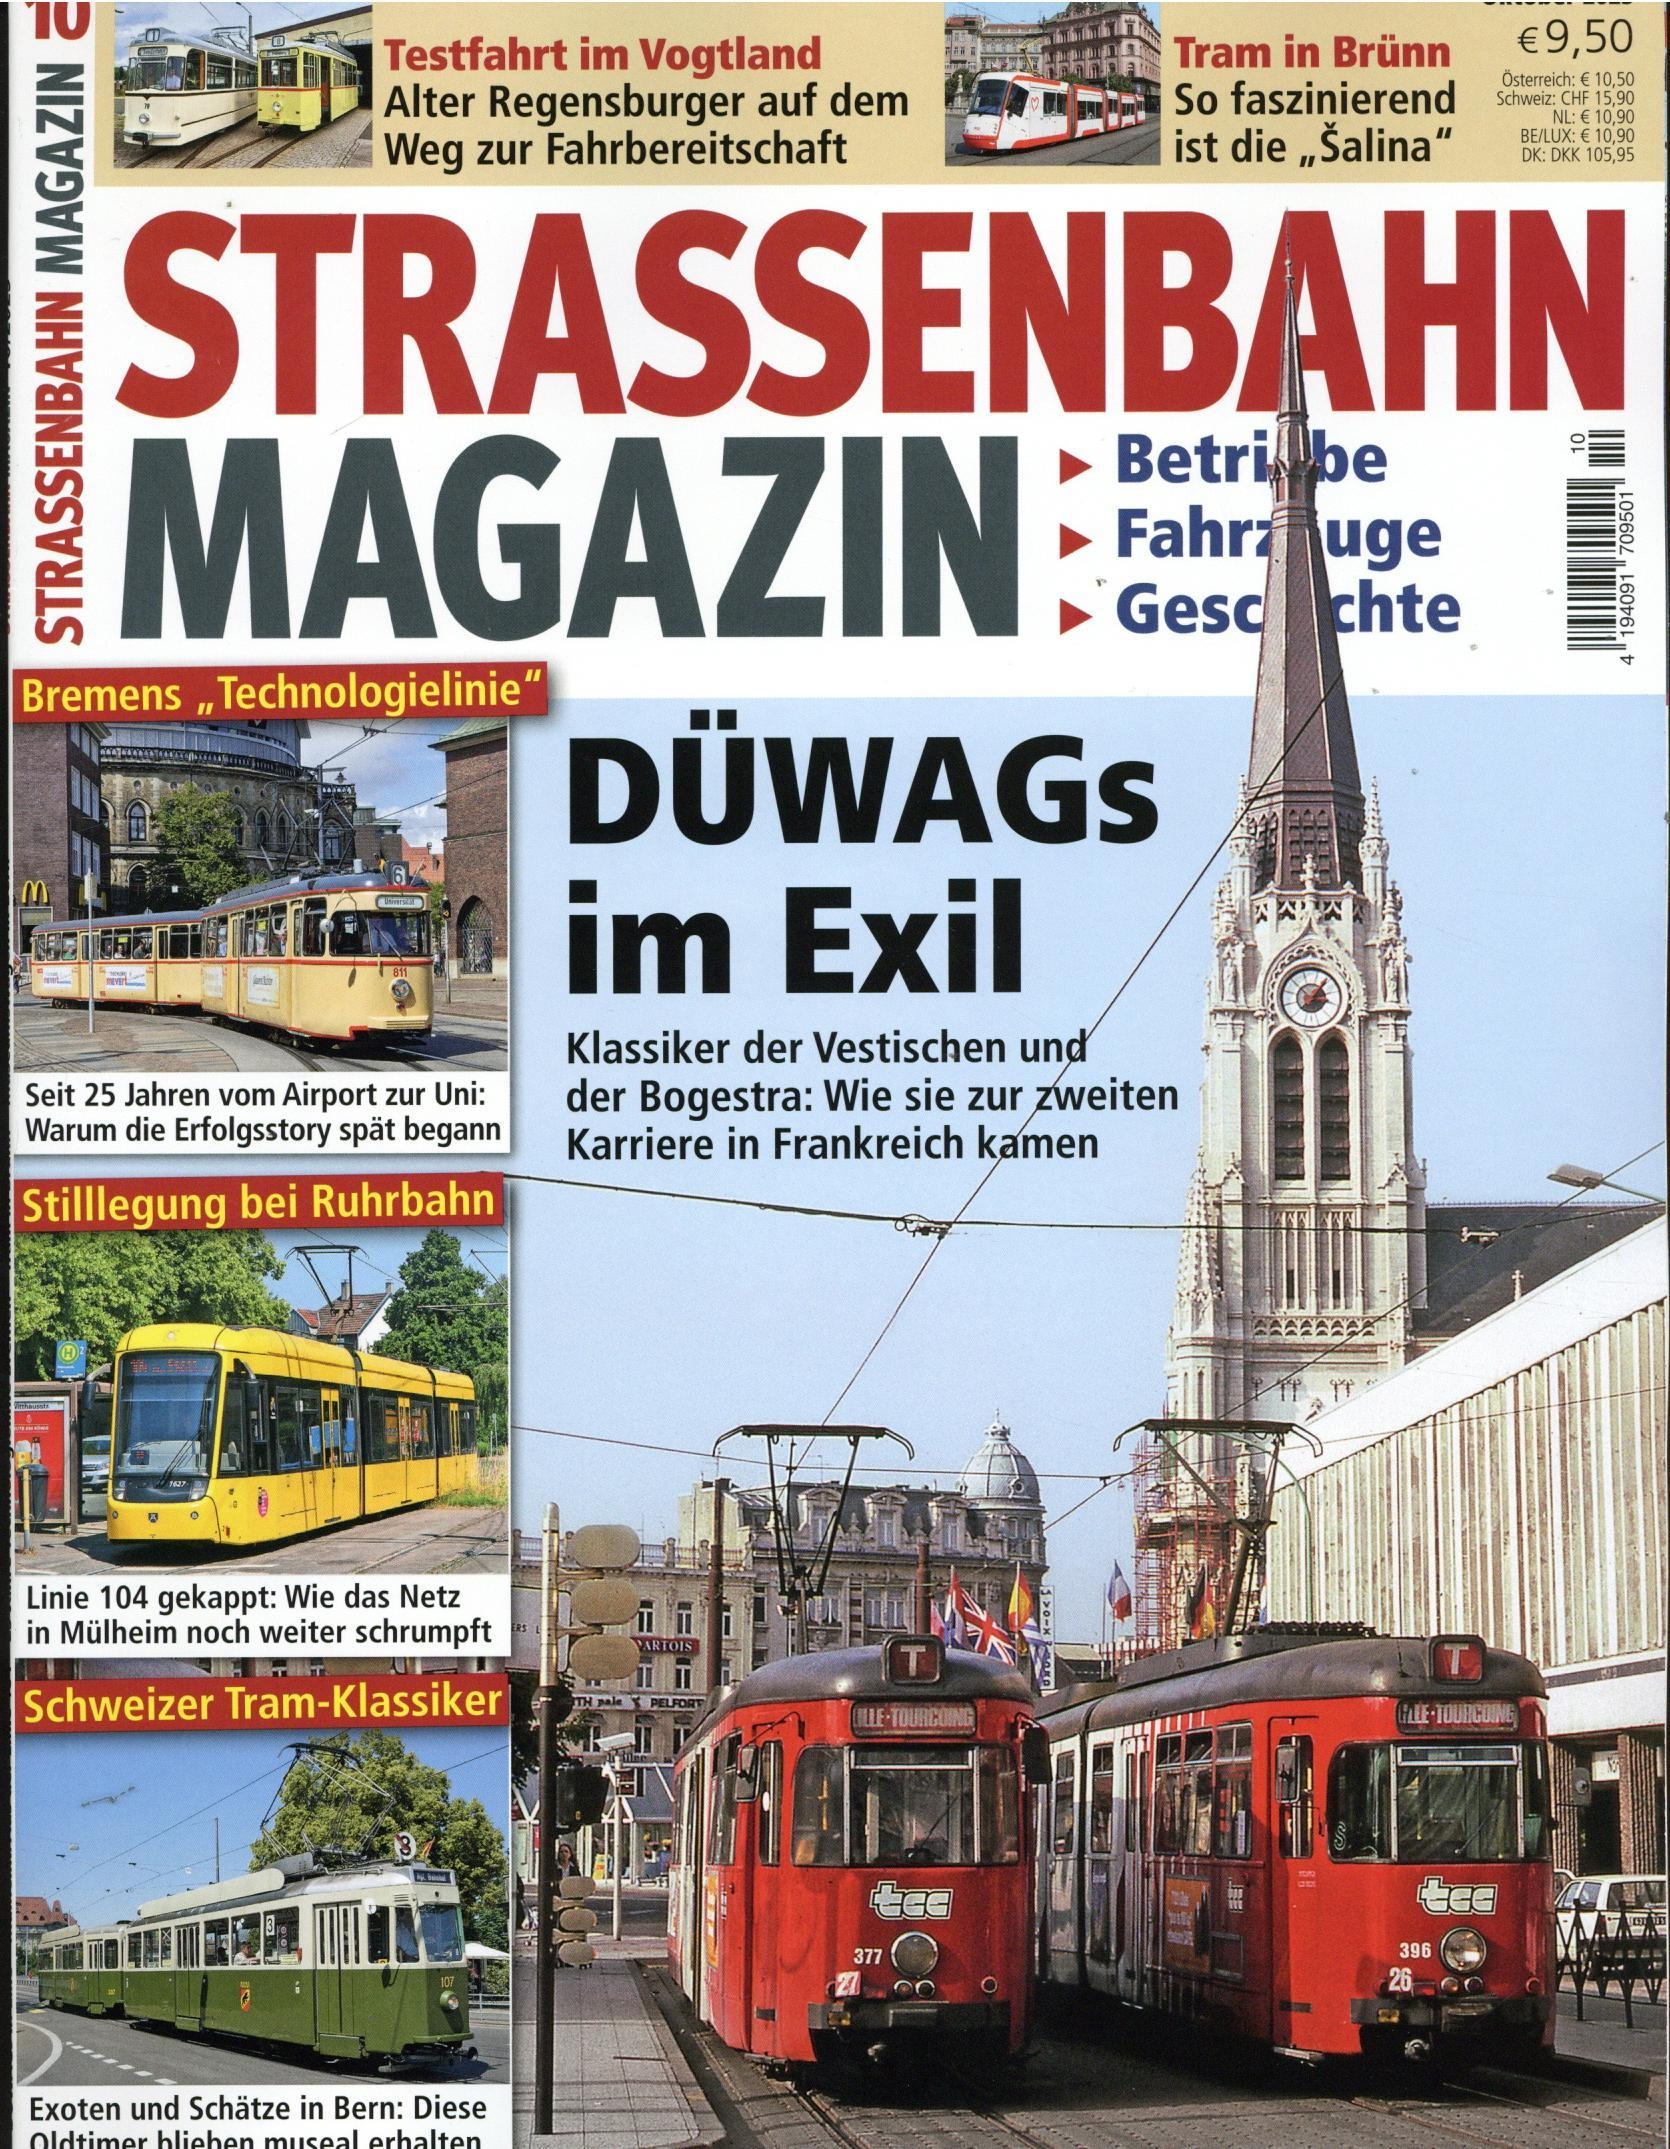 Strassenbahn Magazin